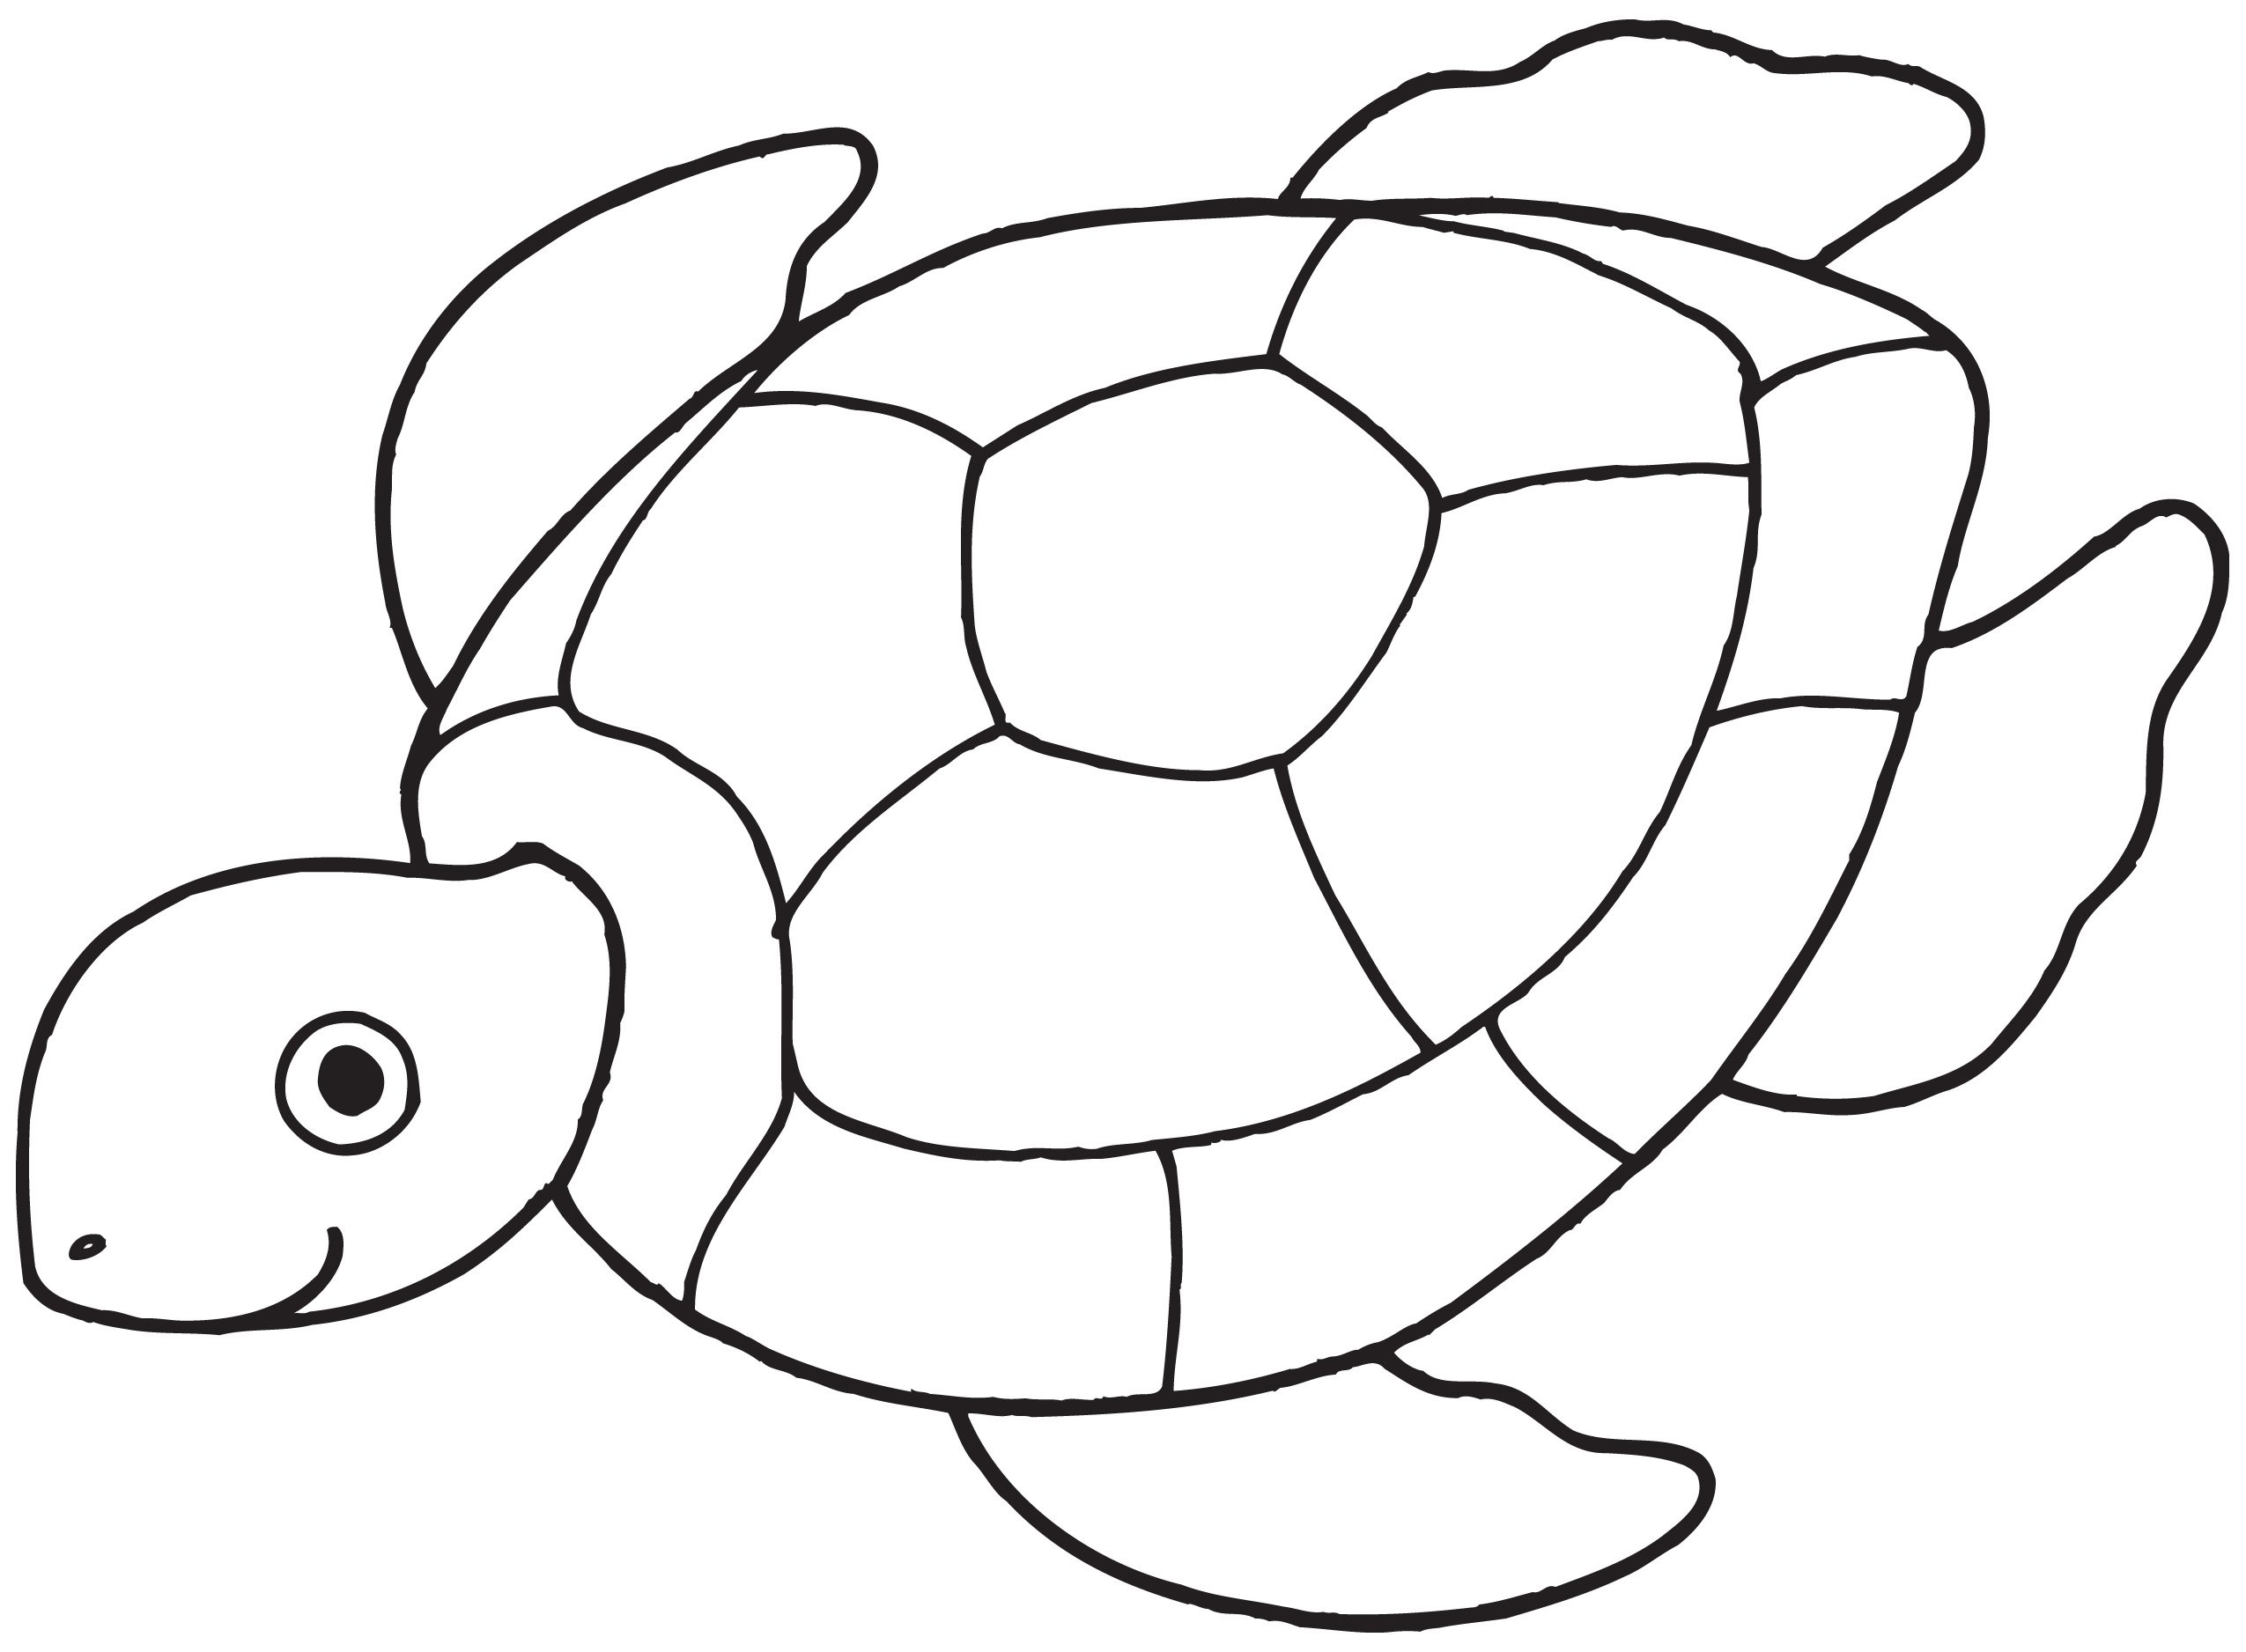 Sea turtle outline clipart